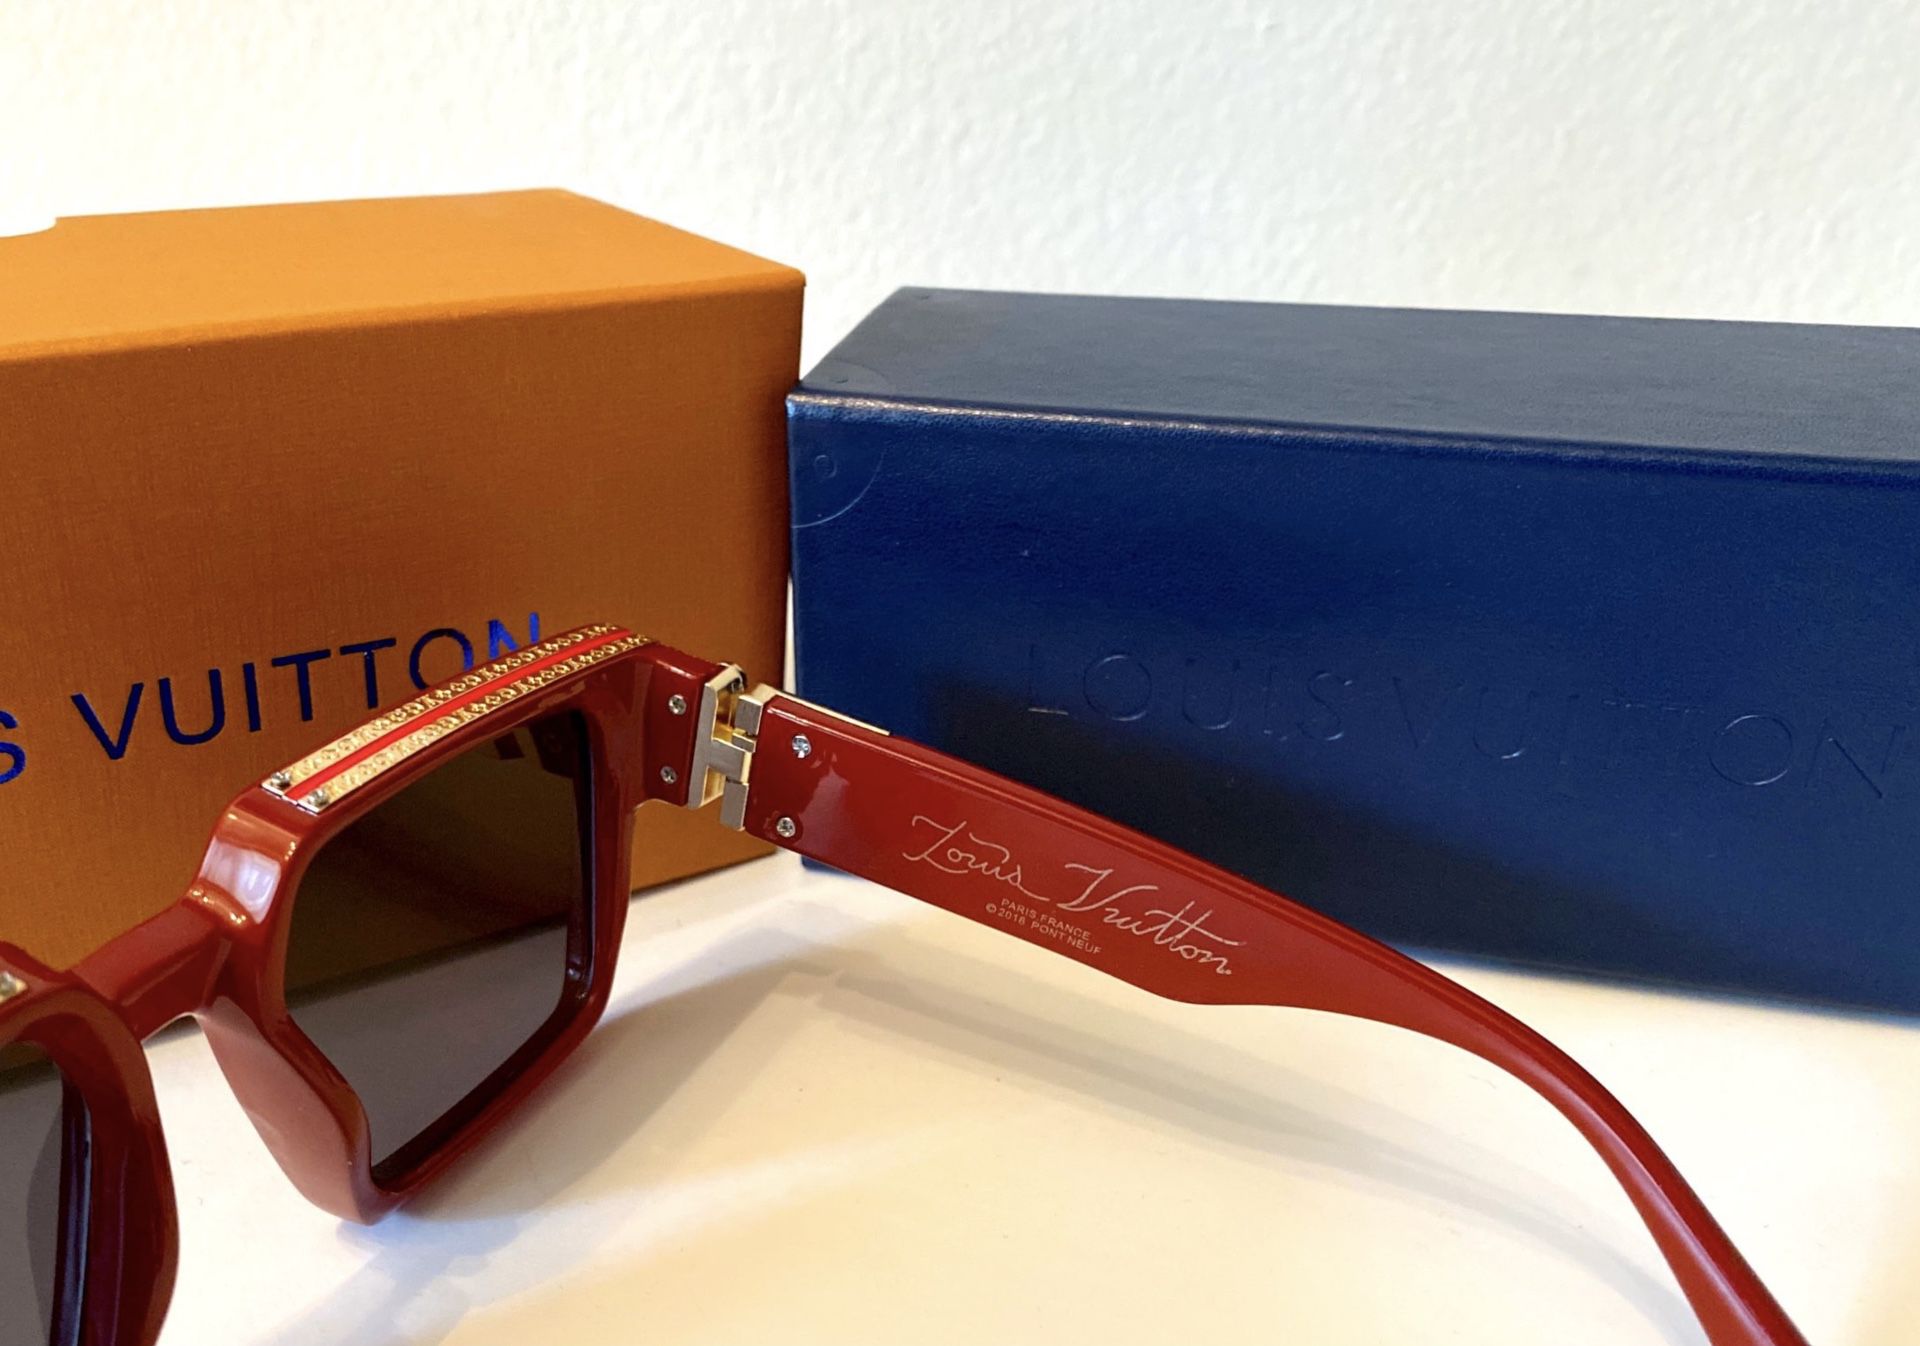 Louis Vuitton Petit Soupcon Cat Eye Sunglasses for Sale in Huntington  Beach, CA - OfferUp